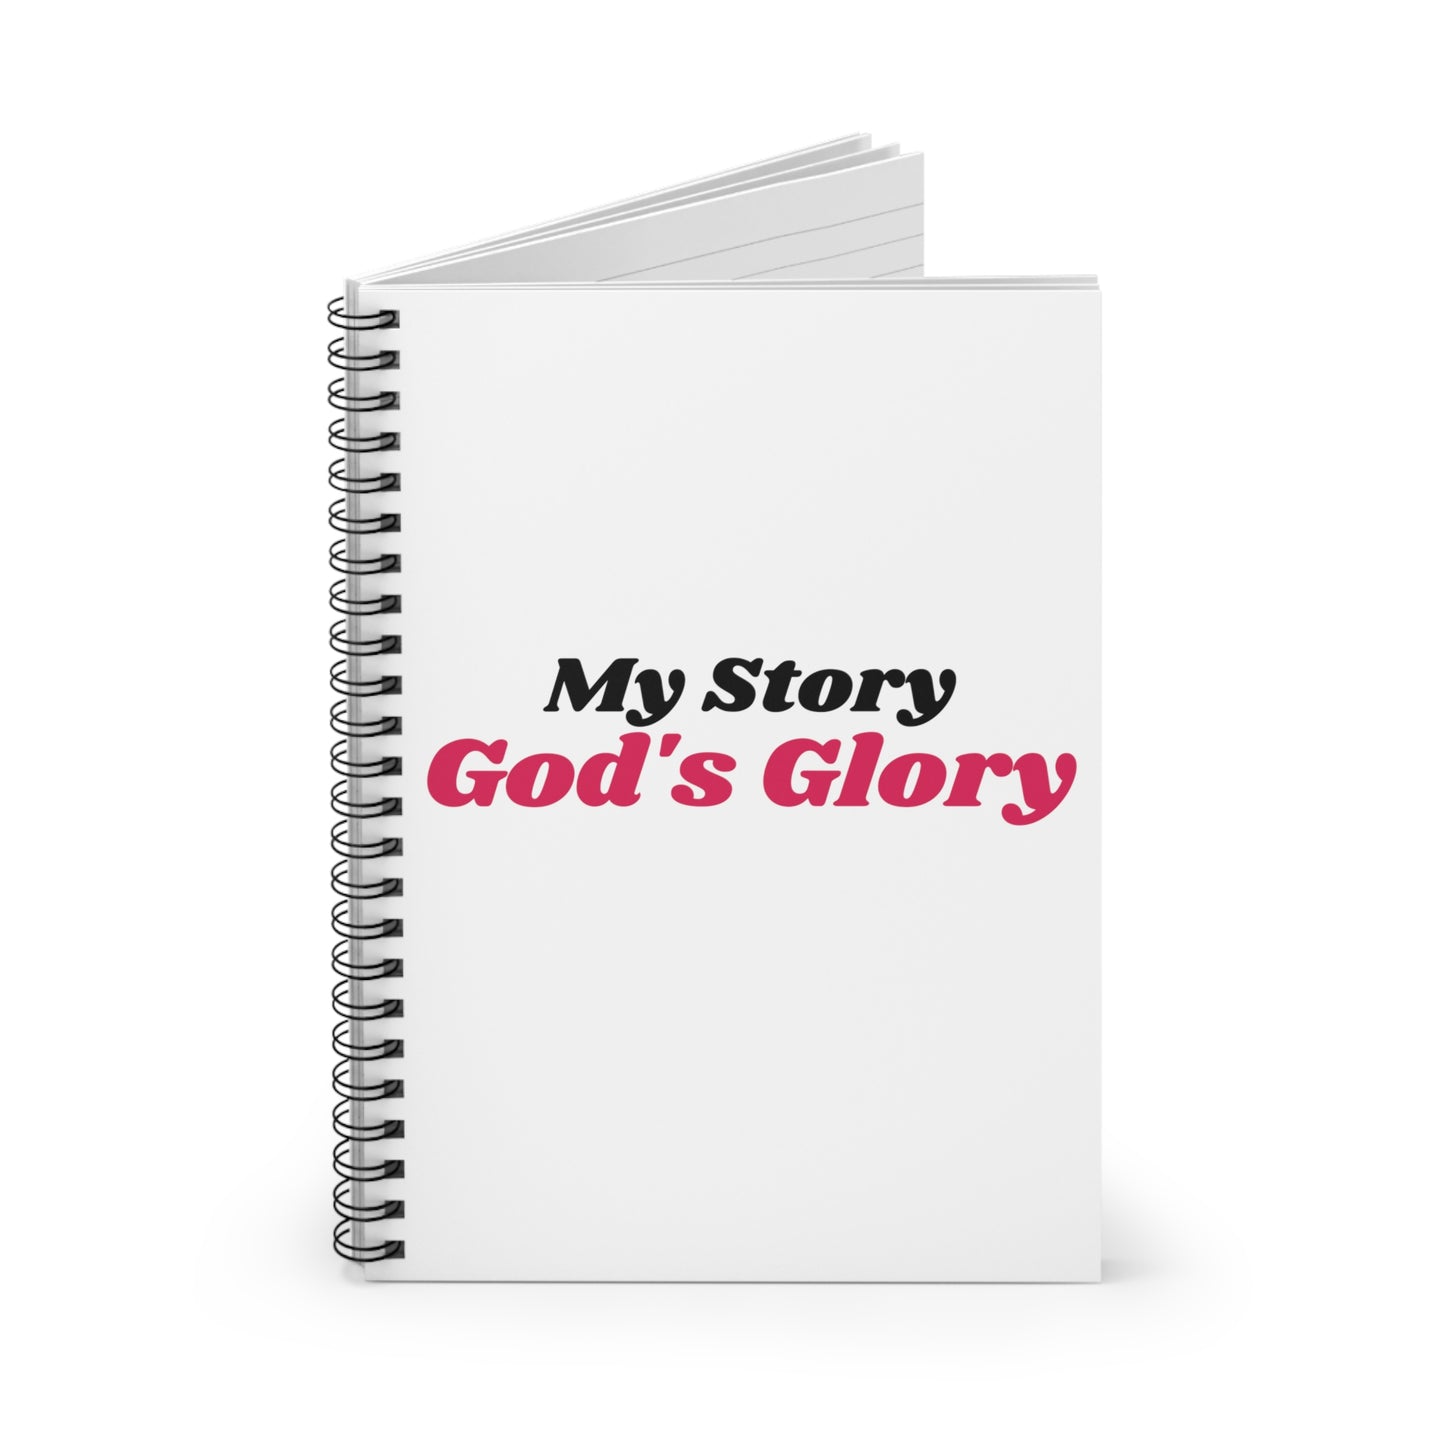 My Story - God's Glory Notebook - Ruled Line